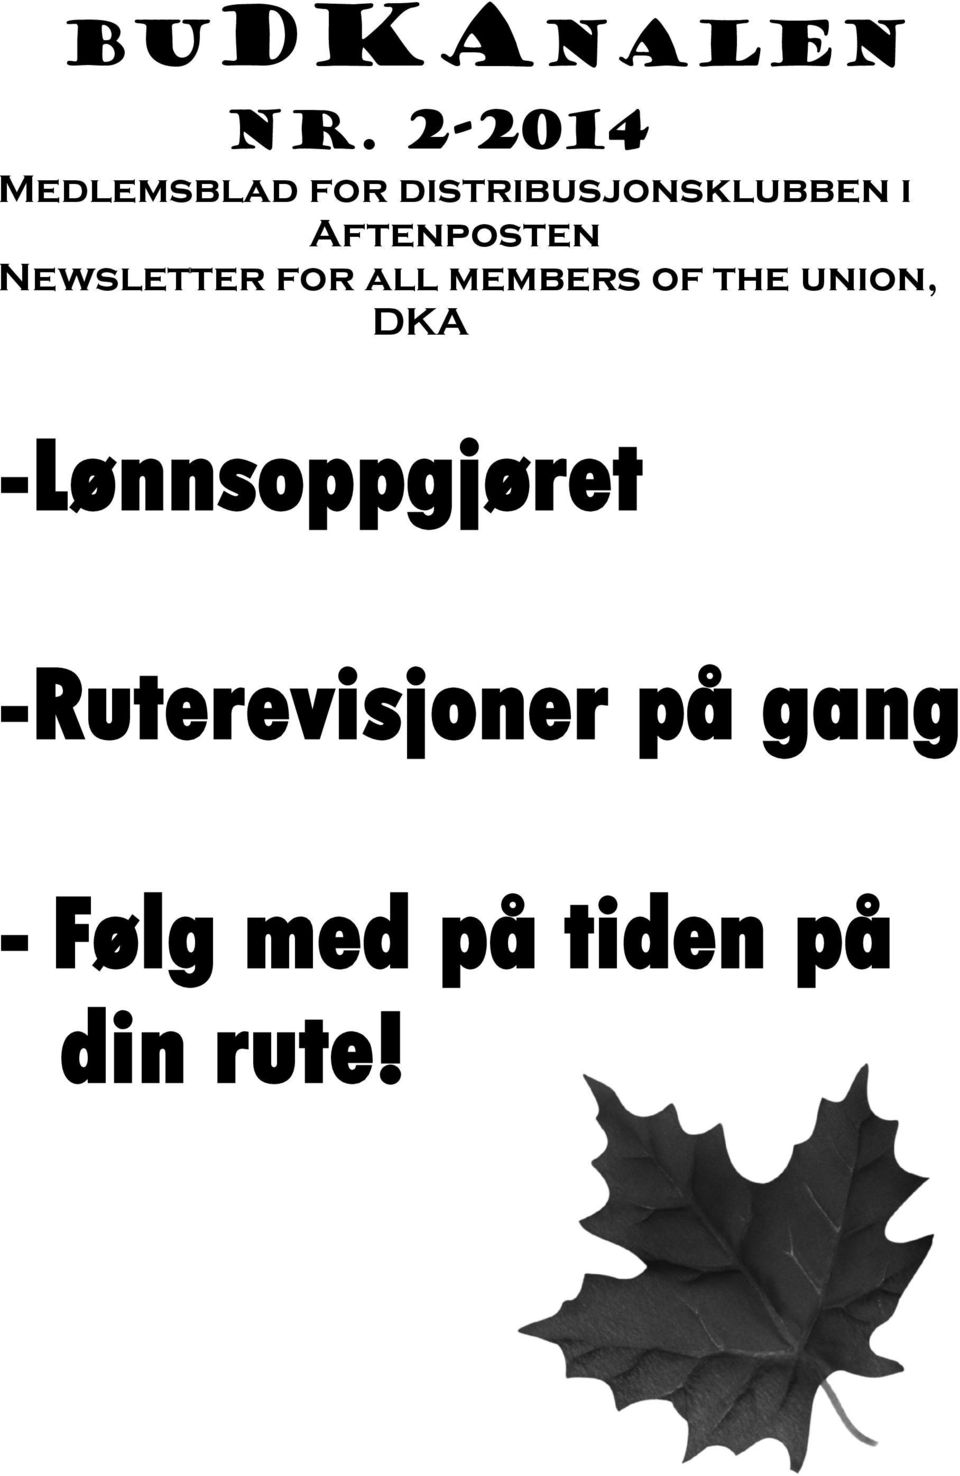 Aftenposten Newsletter for all members of the